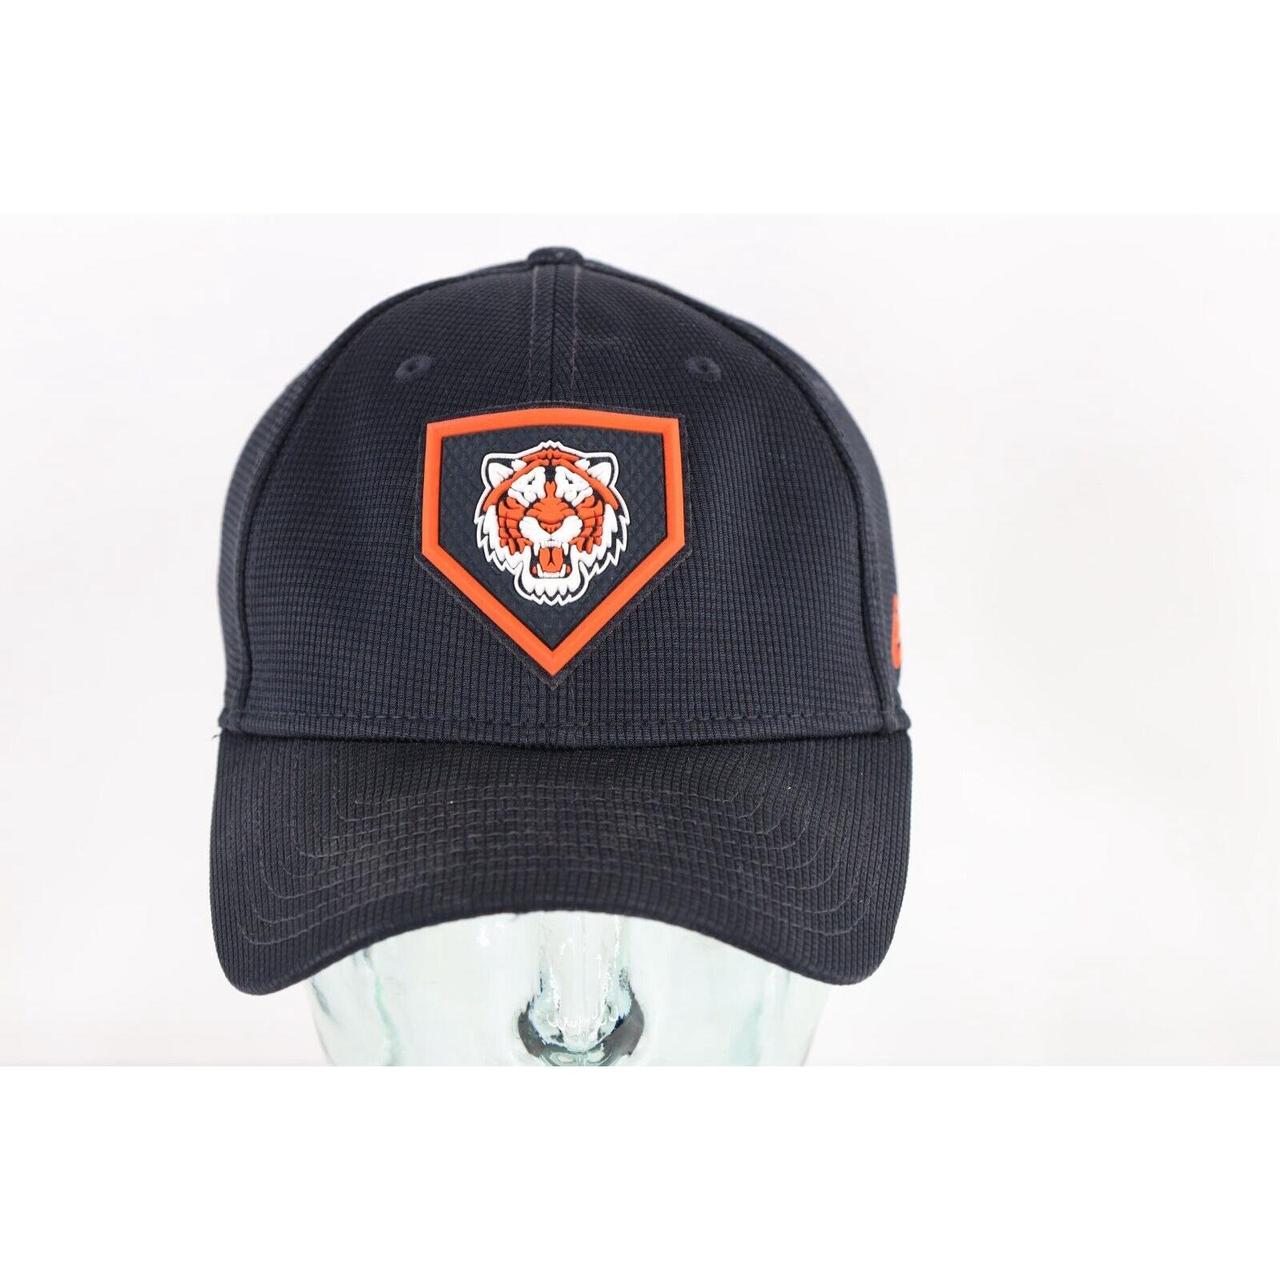 Detroit mlb hat •Size - small medium •Condition - Depop